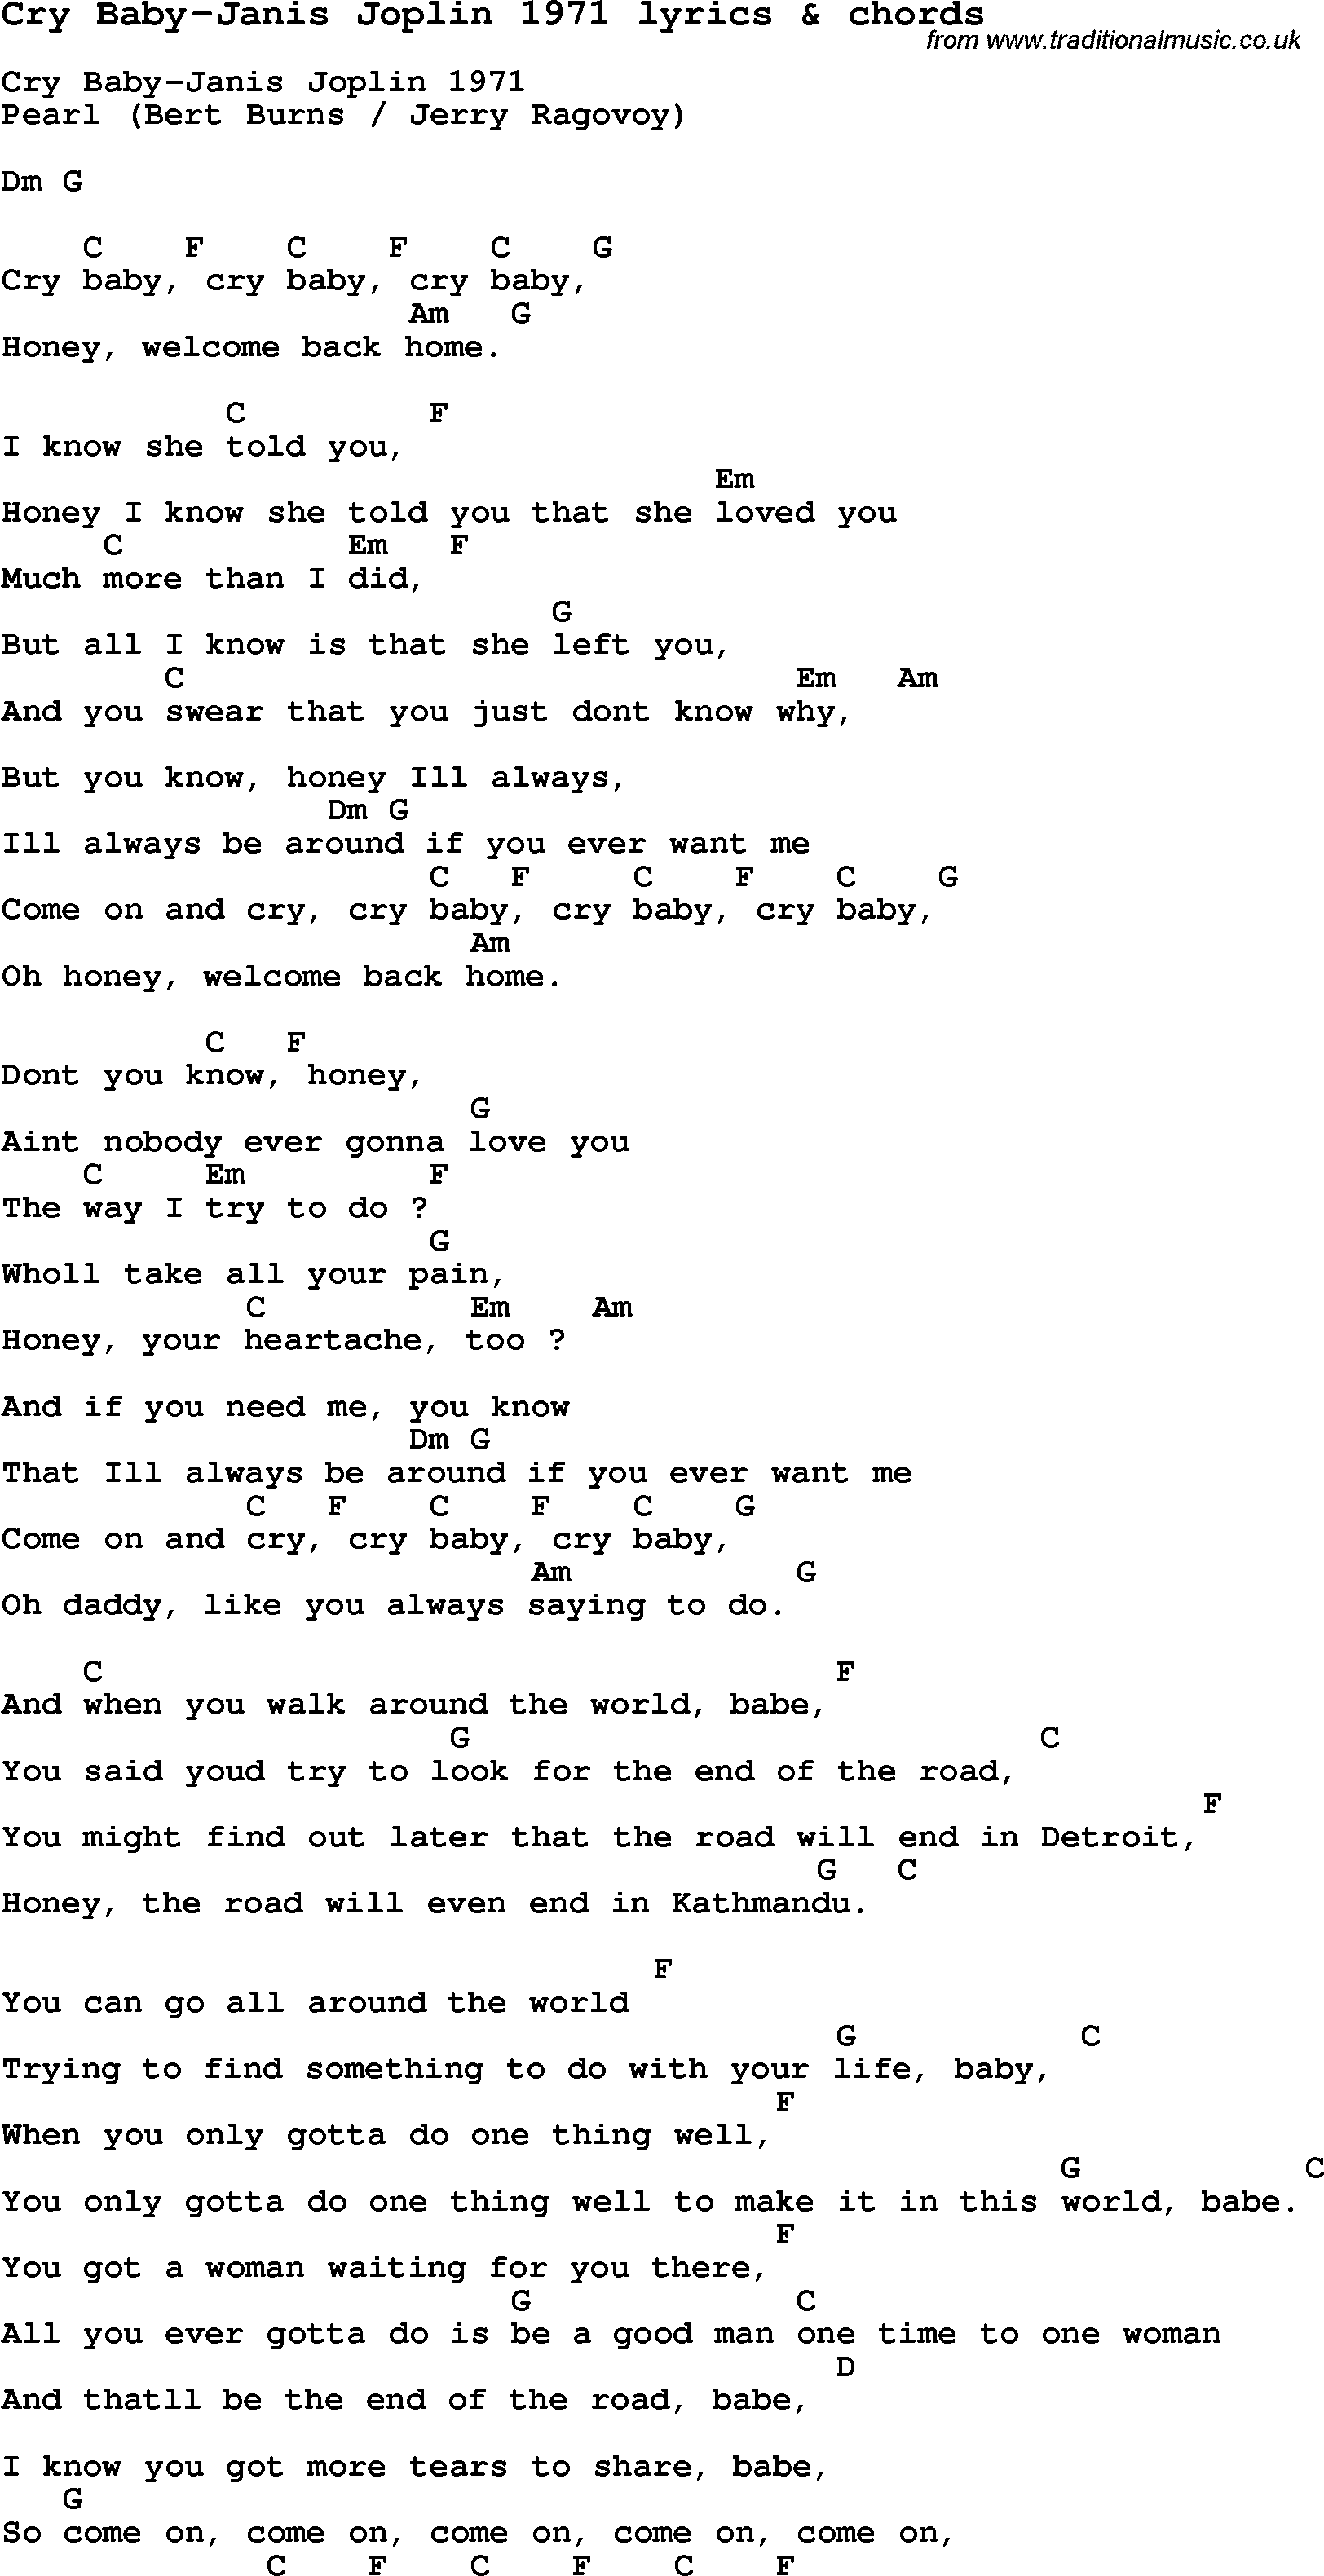 Love Song Lyrics for: Cry Baby-Janis Joplin 1971 with chords for Ukulele, Guitar Banjo etc.